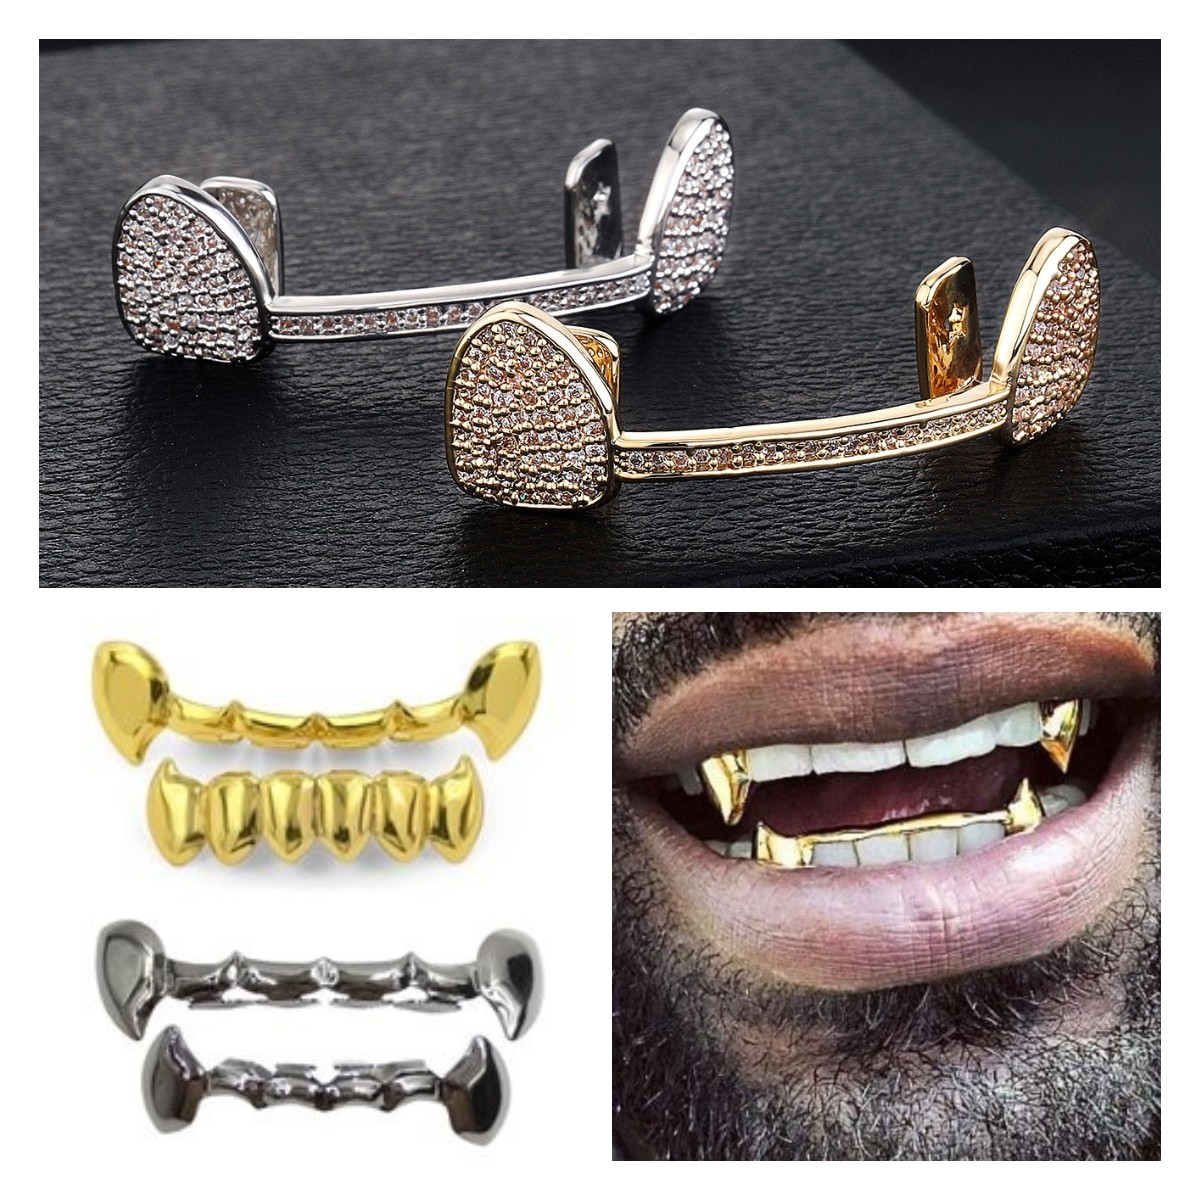 Hiphop vampyr t￤nder fang grillz 18k real guld cz kubik zirkonium diamant tand munnen grillar stag upp botten tand m￶ssa rappar kropp smycken f￶r kostym halloween fest